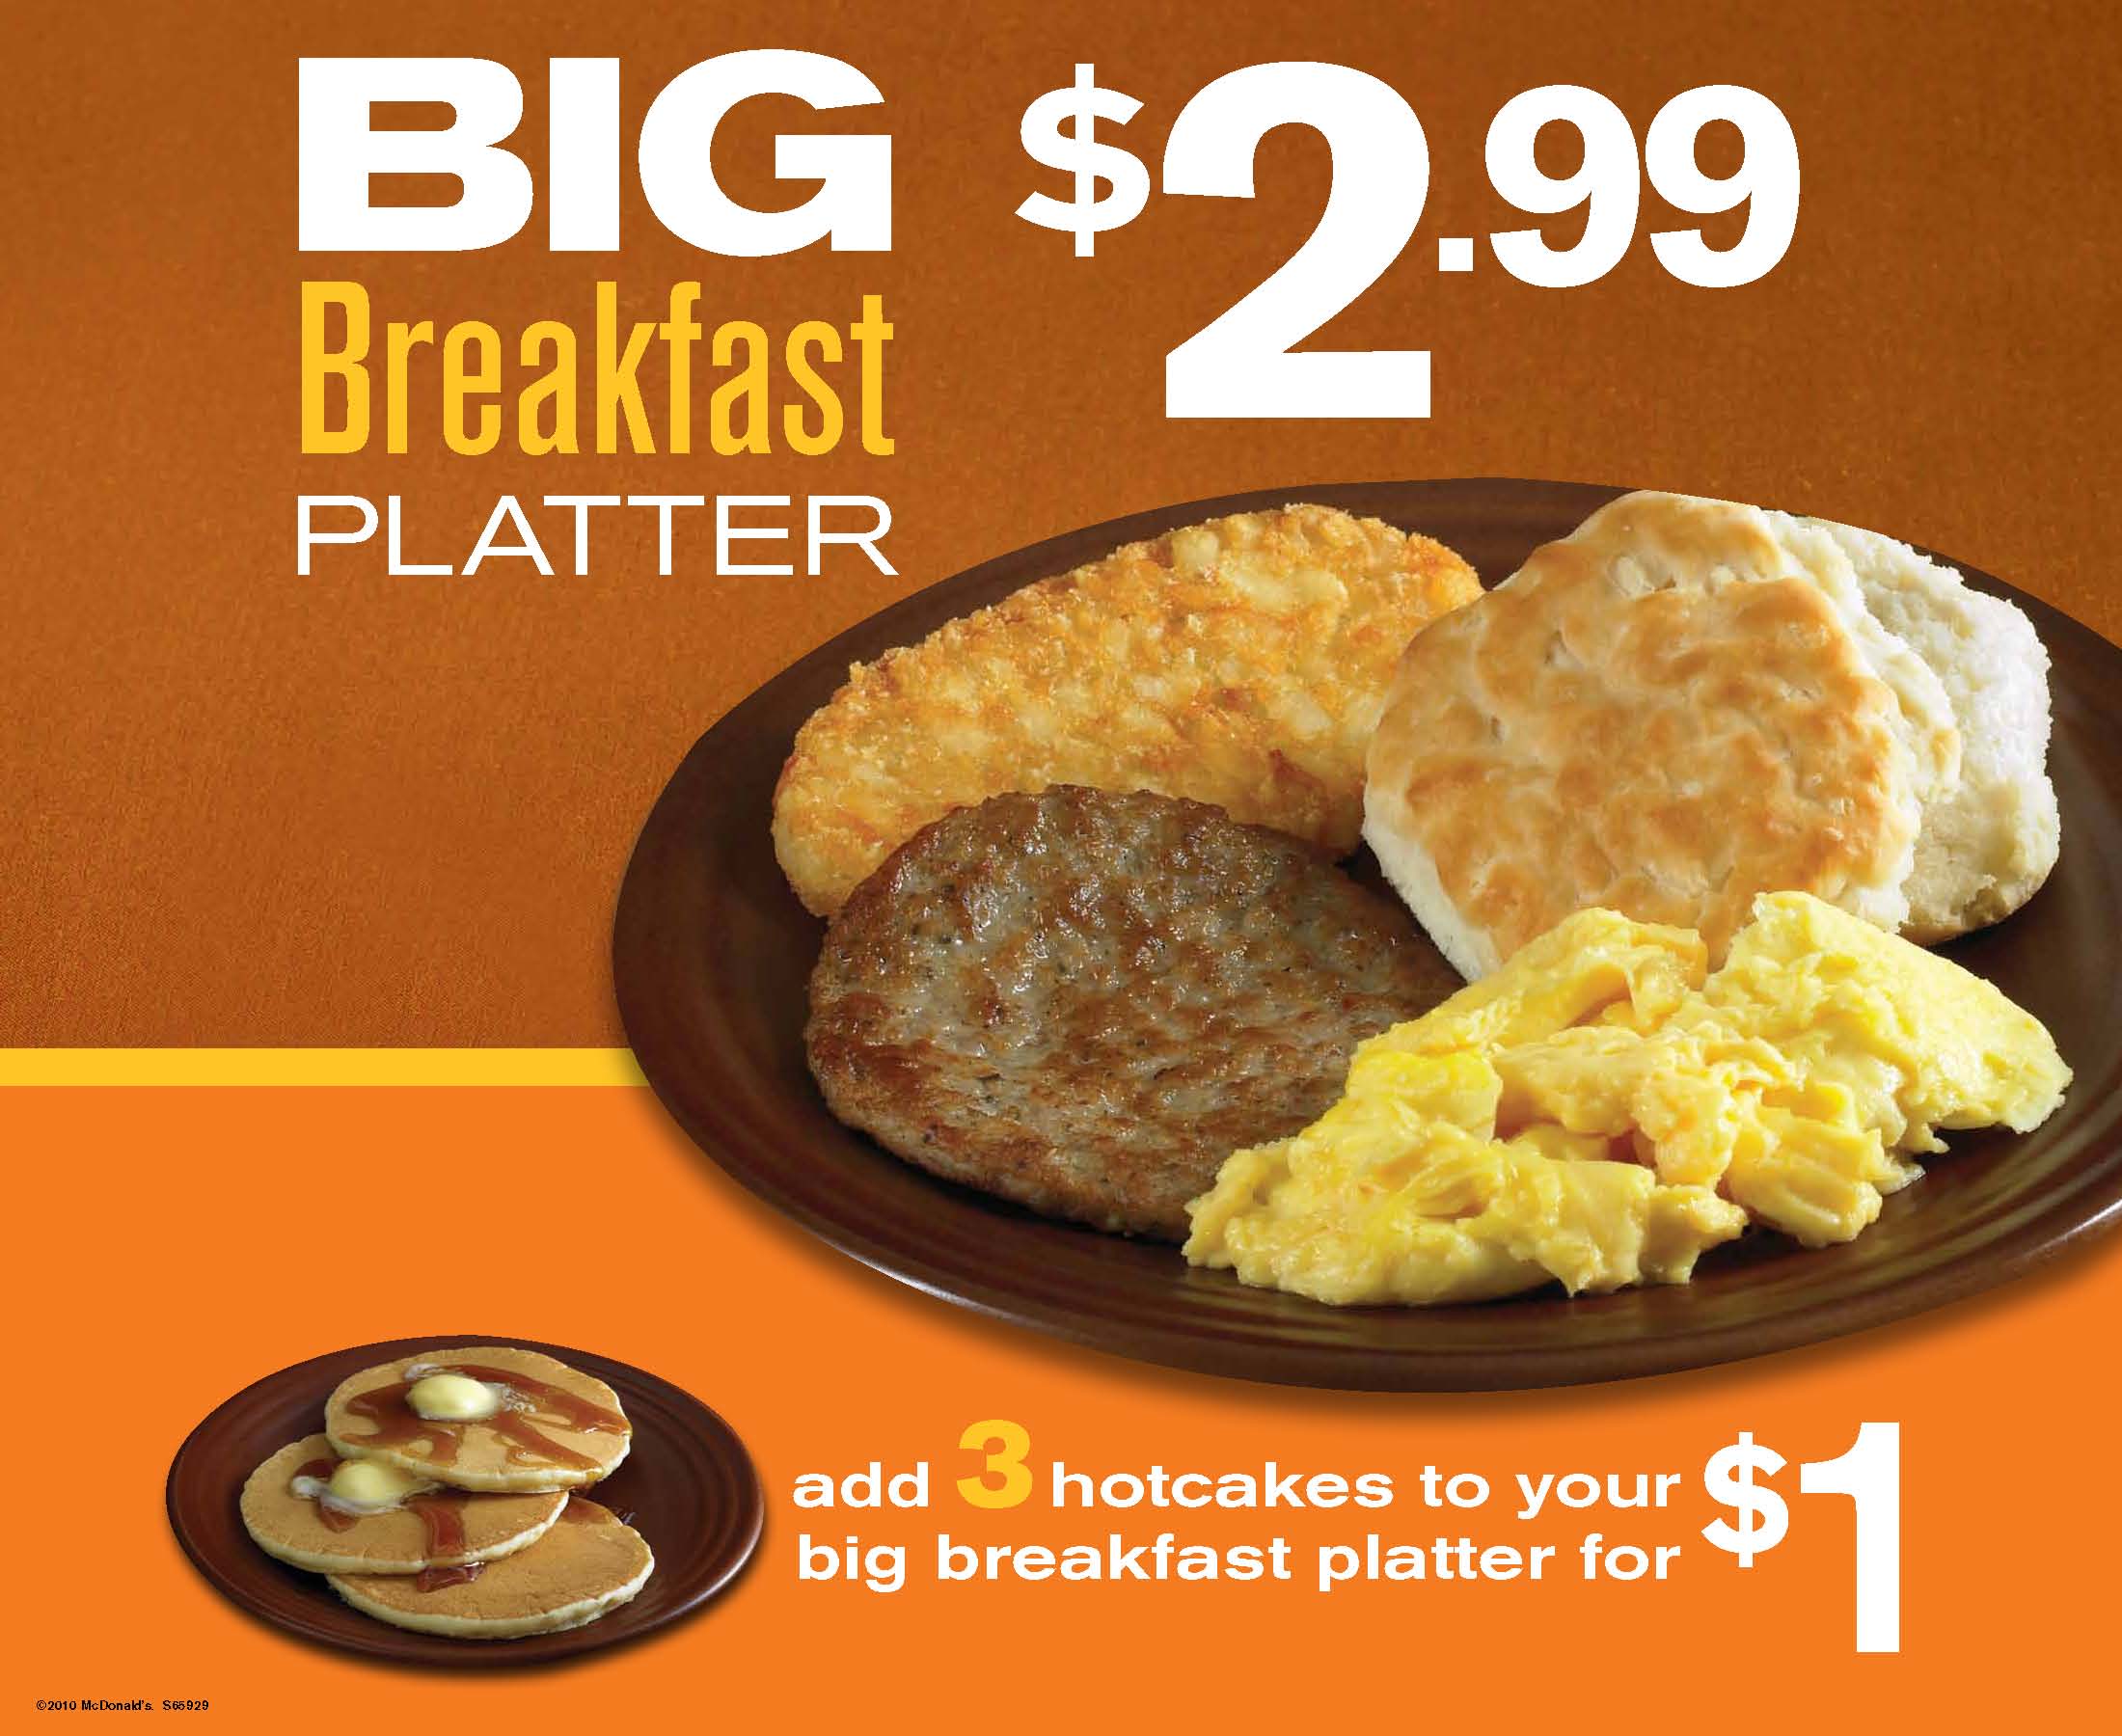 mcdonalds breakfast menu prices canada